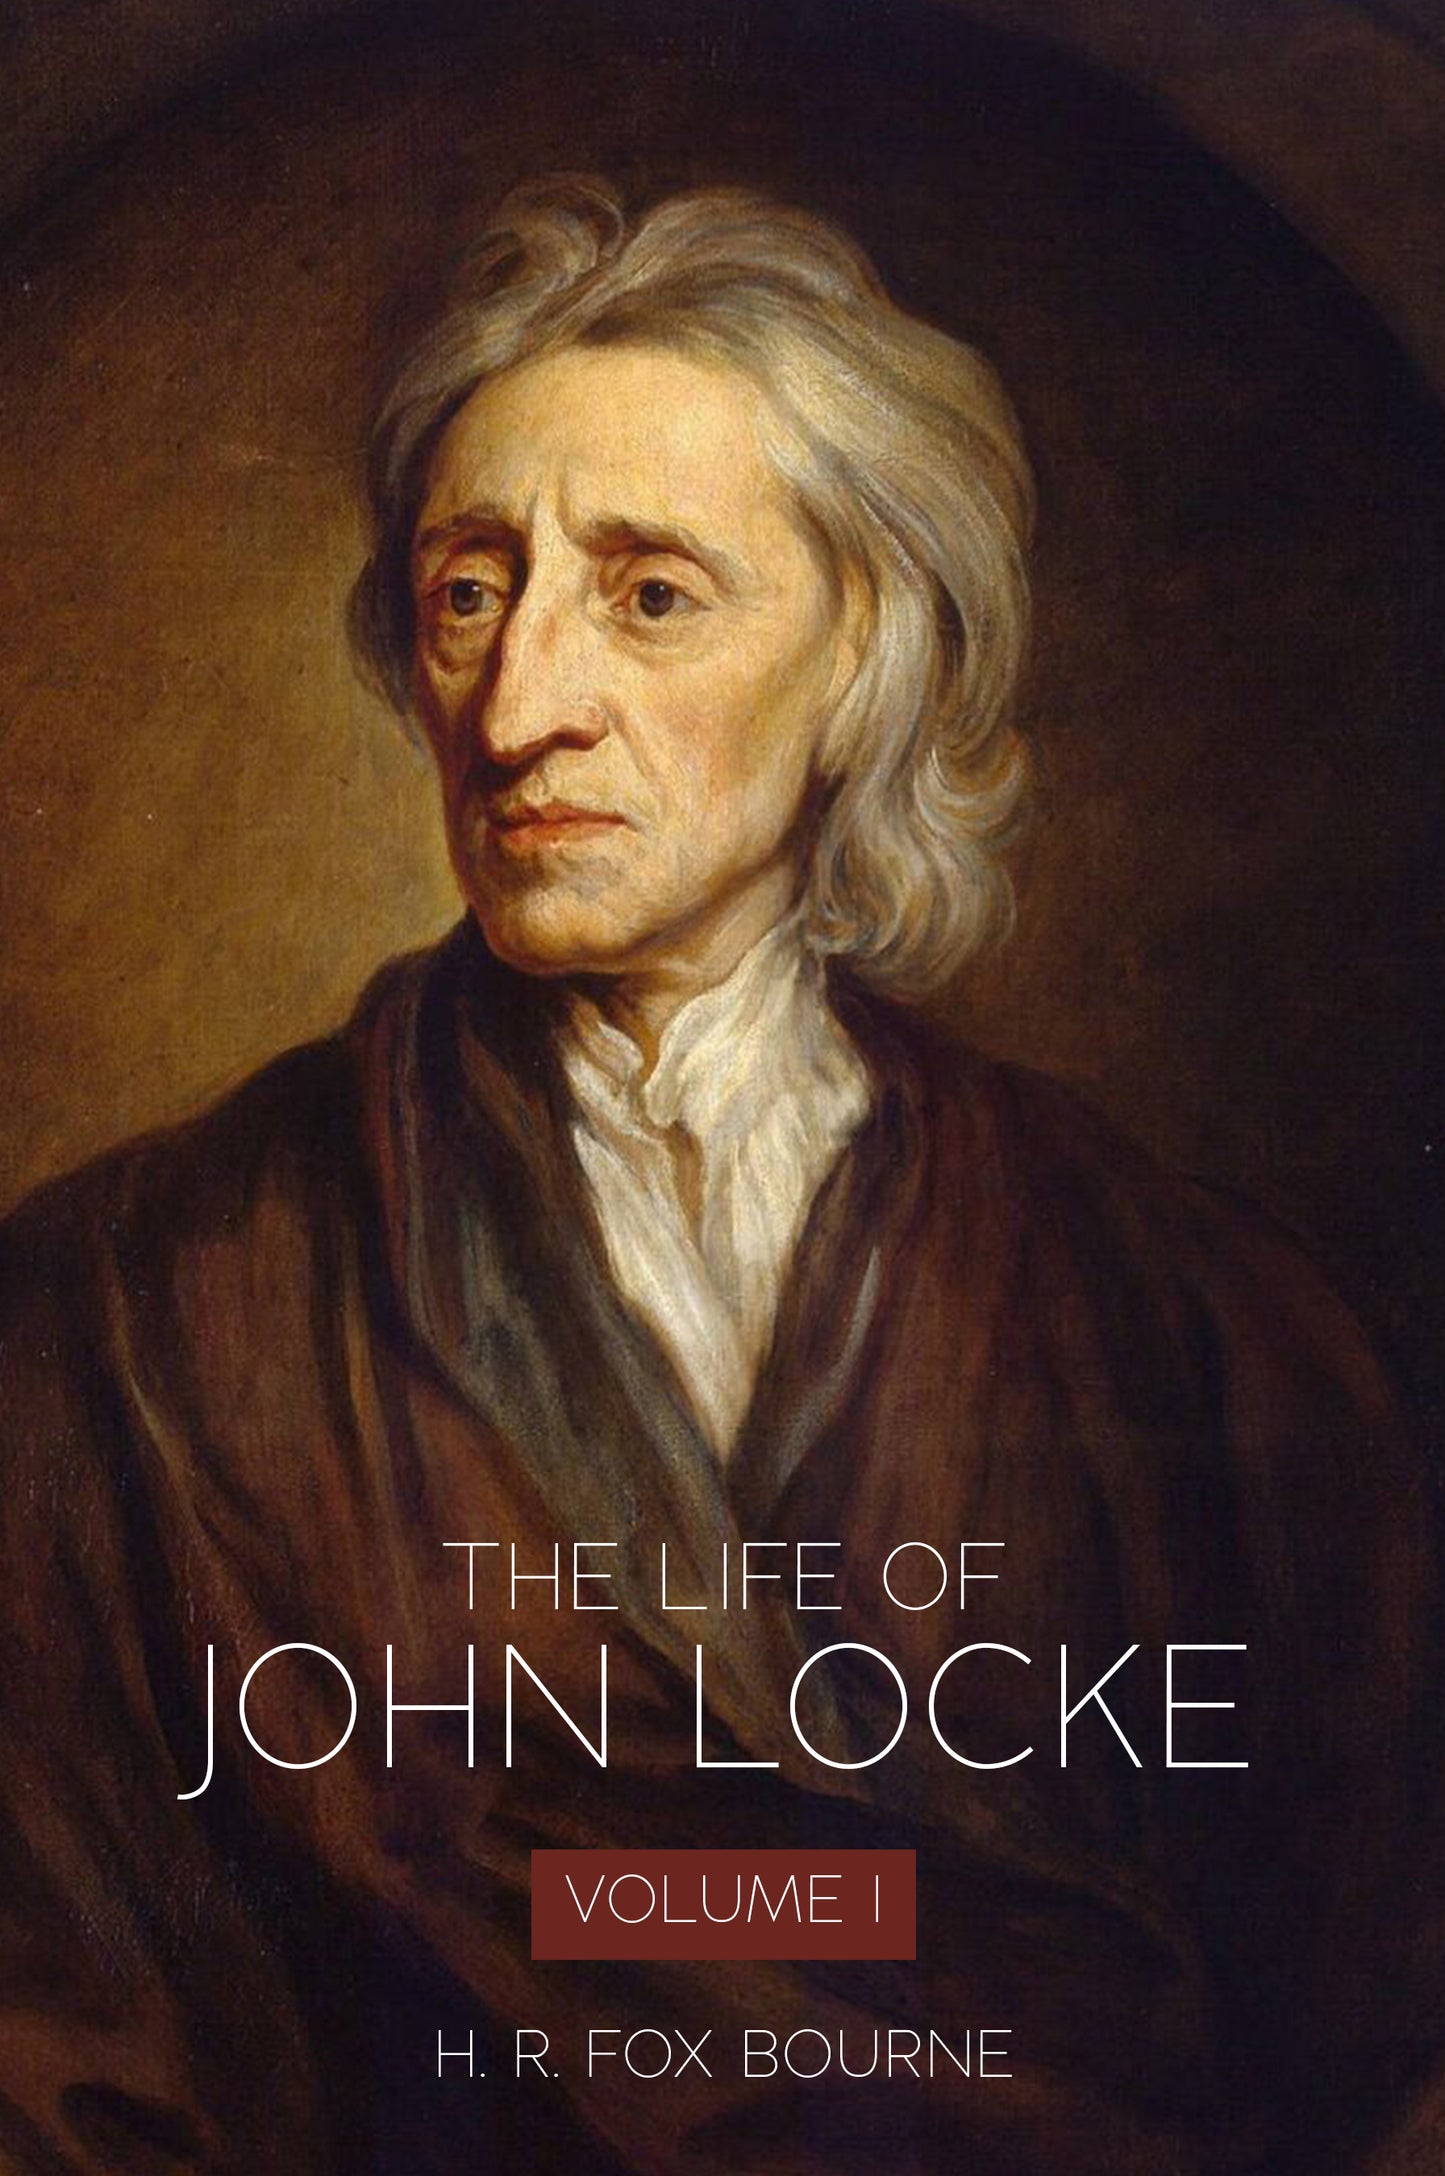 The Life of John Locke Volume I